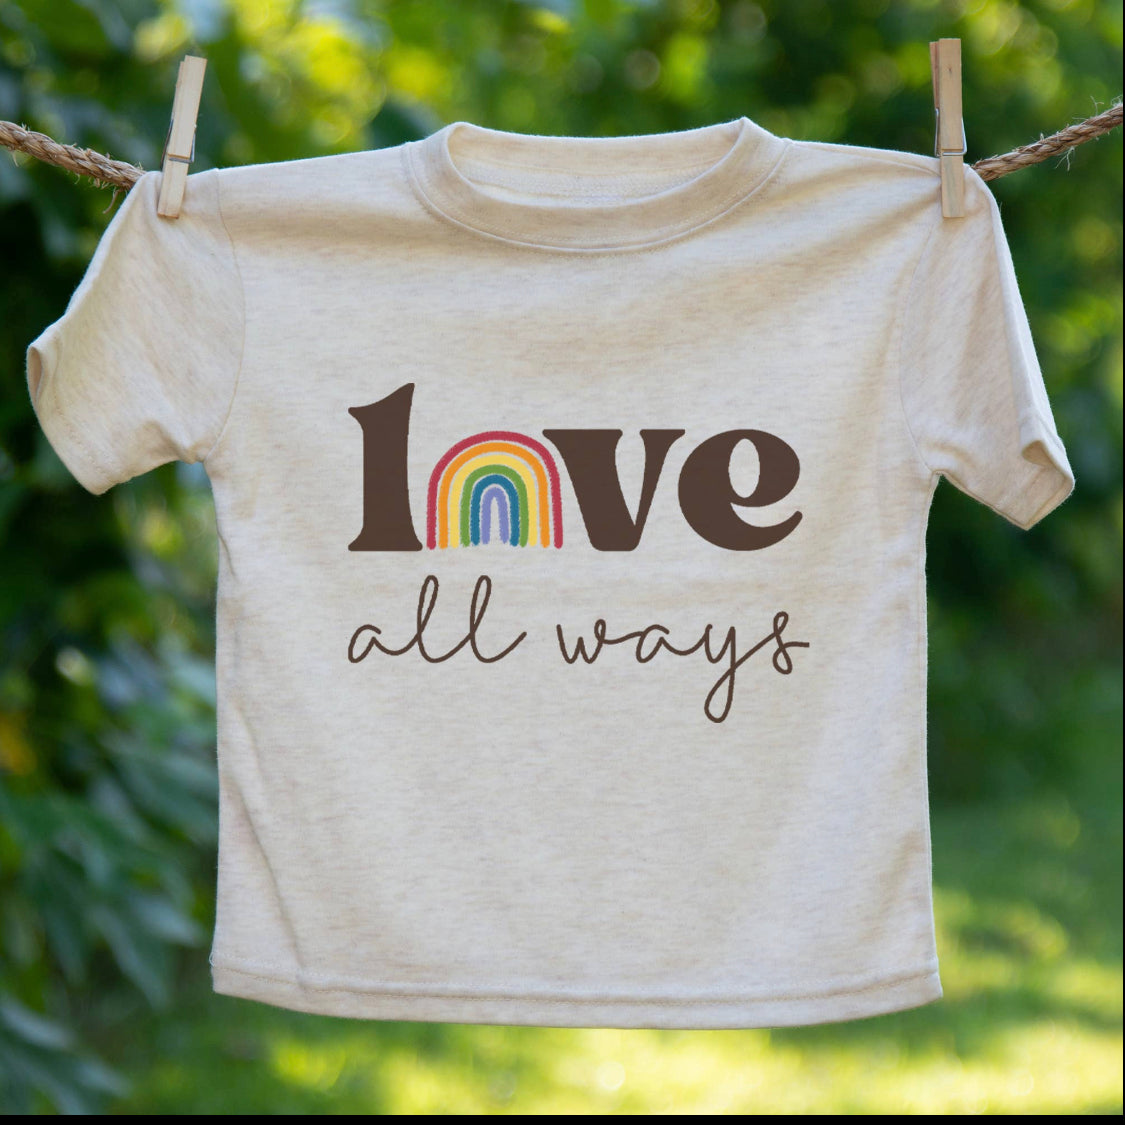 "Love All Ways" Toddler Tee